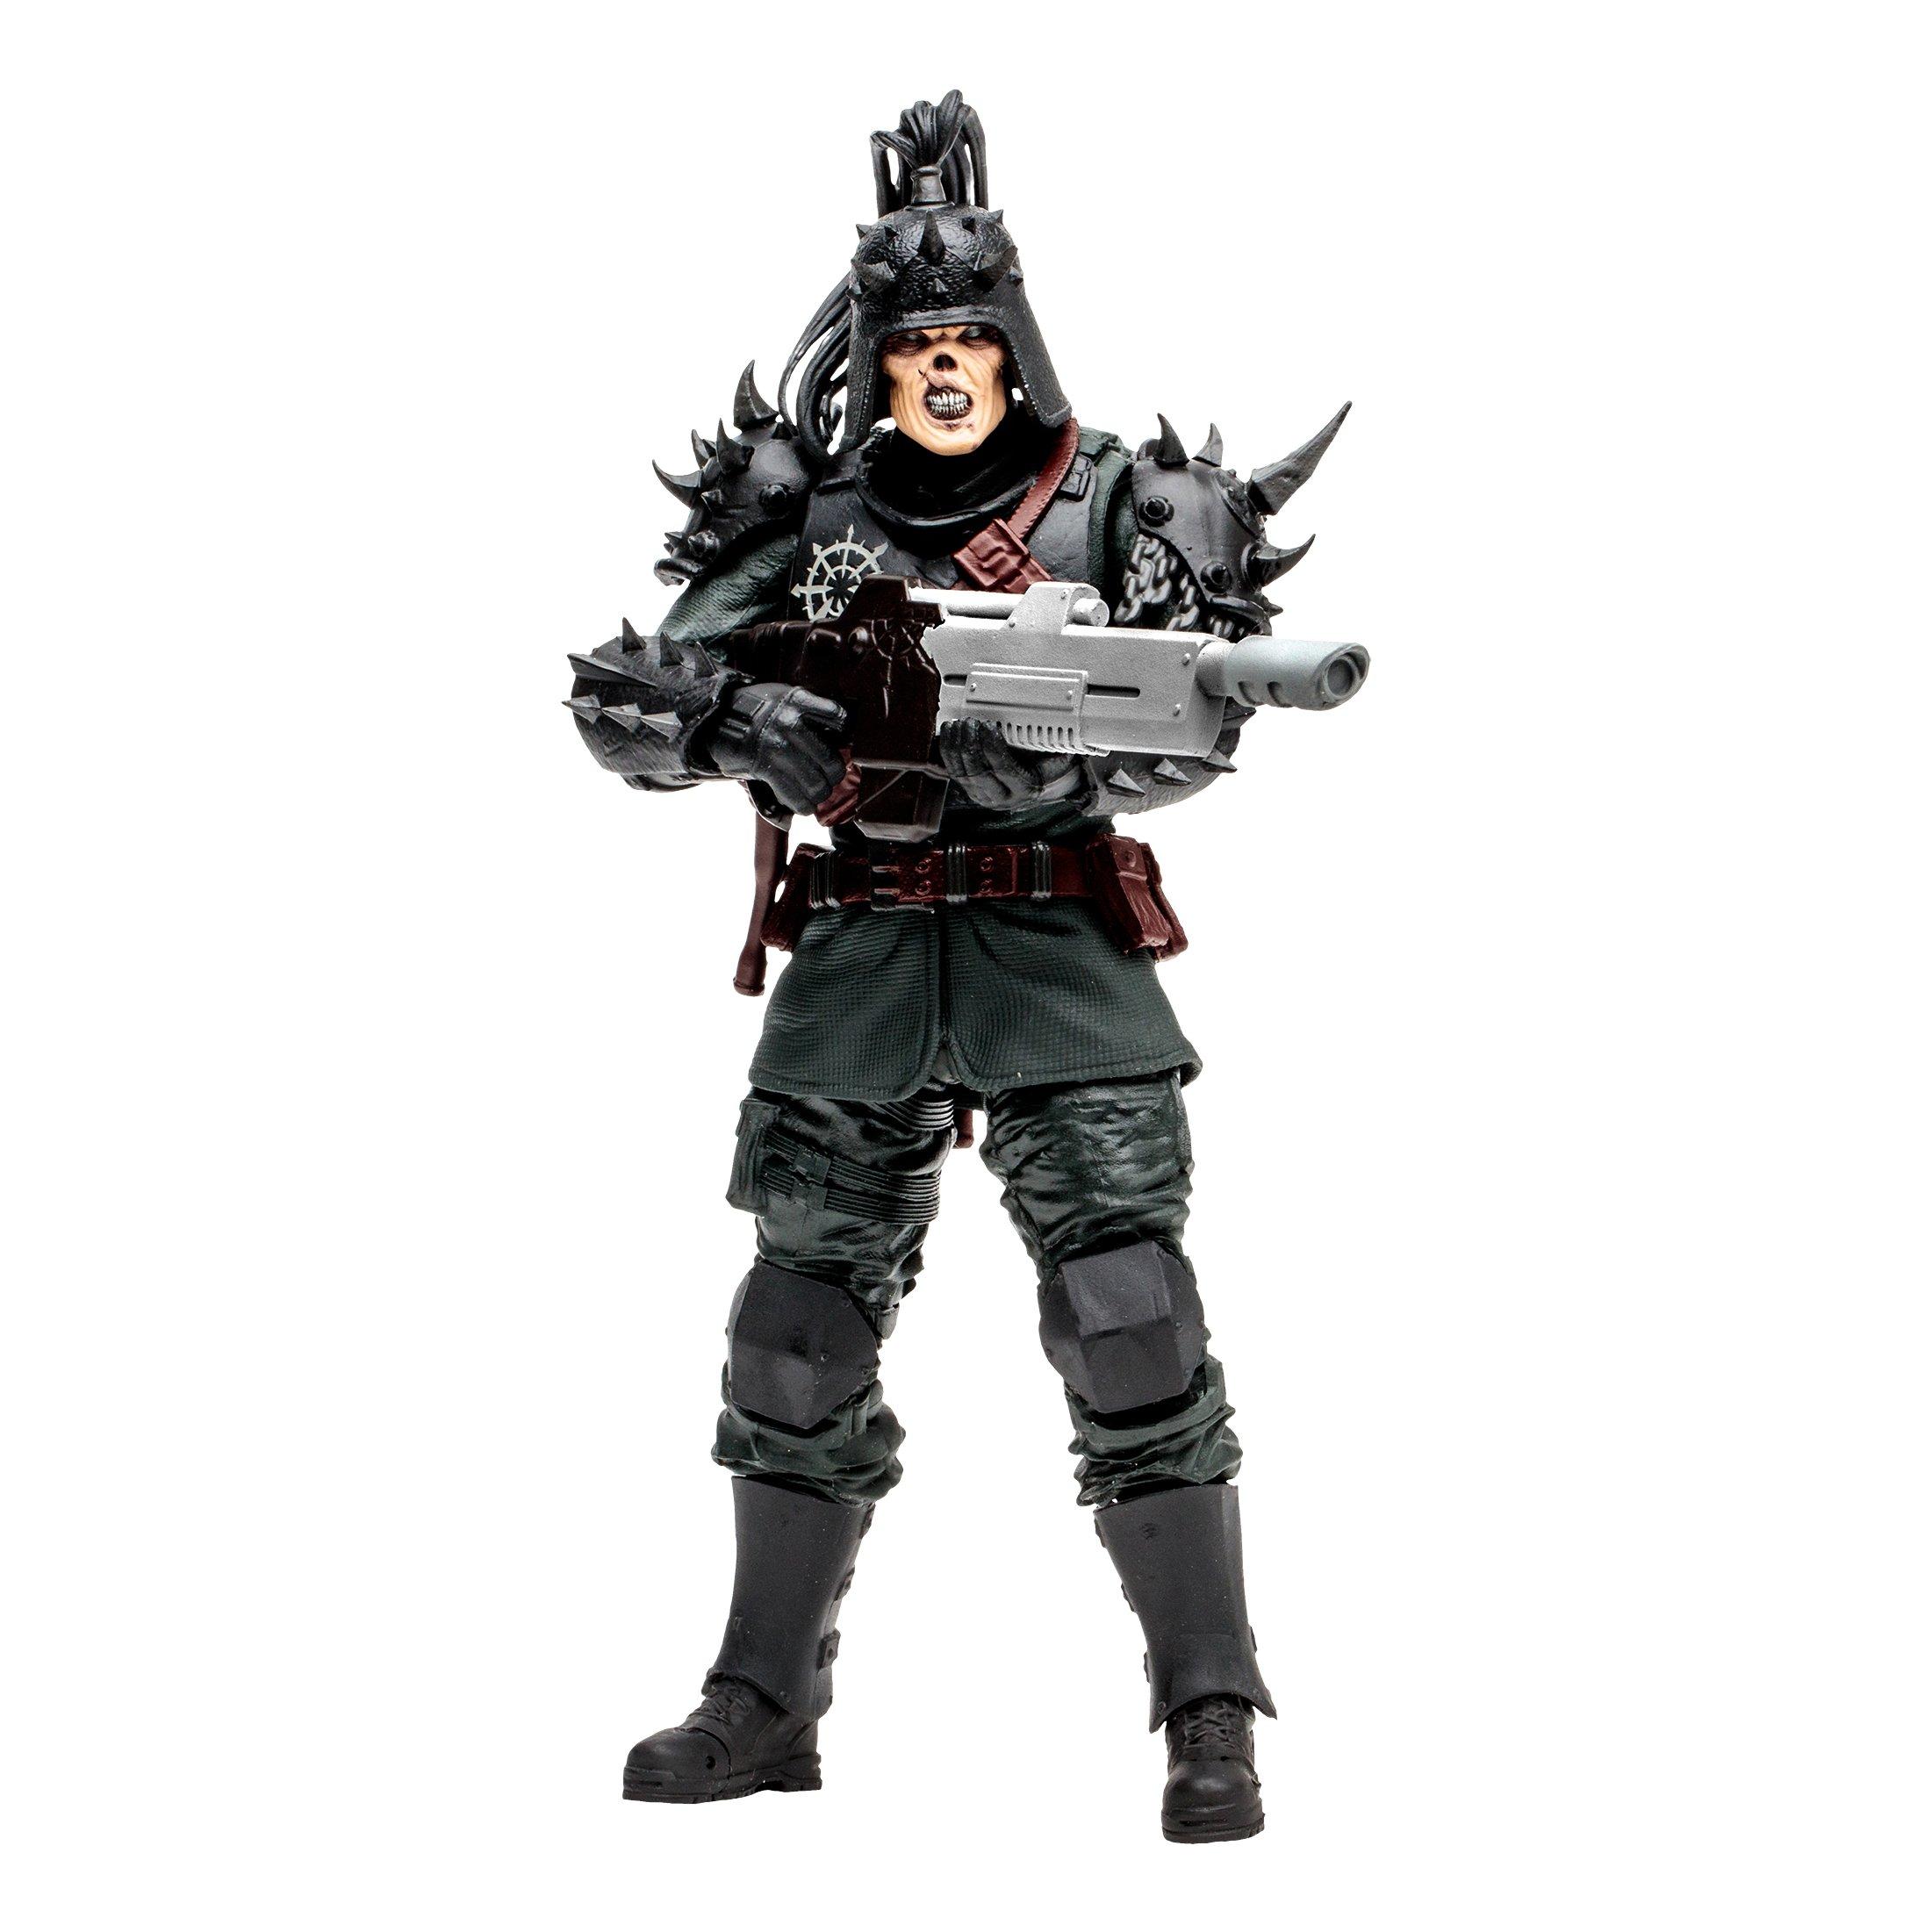 McFarlane Toys Warhammer 40,000: Darktide Traitor Guard 7-in Action Figure